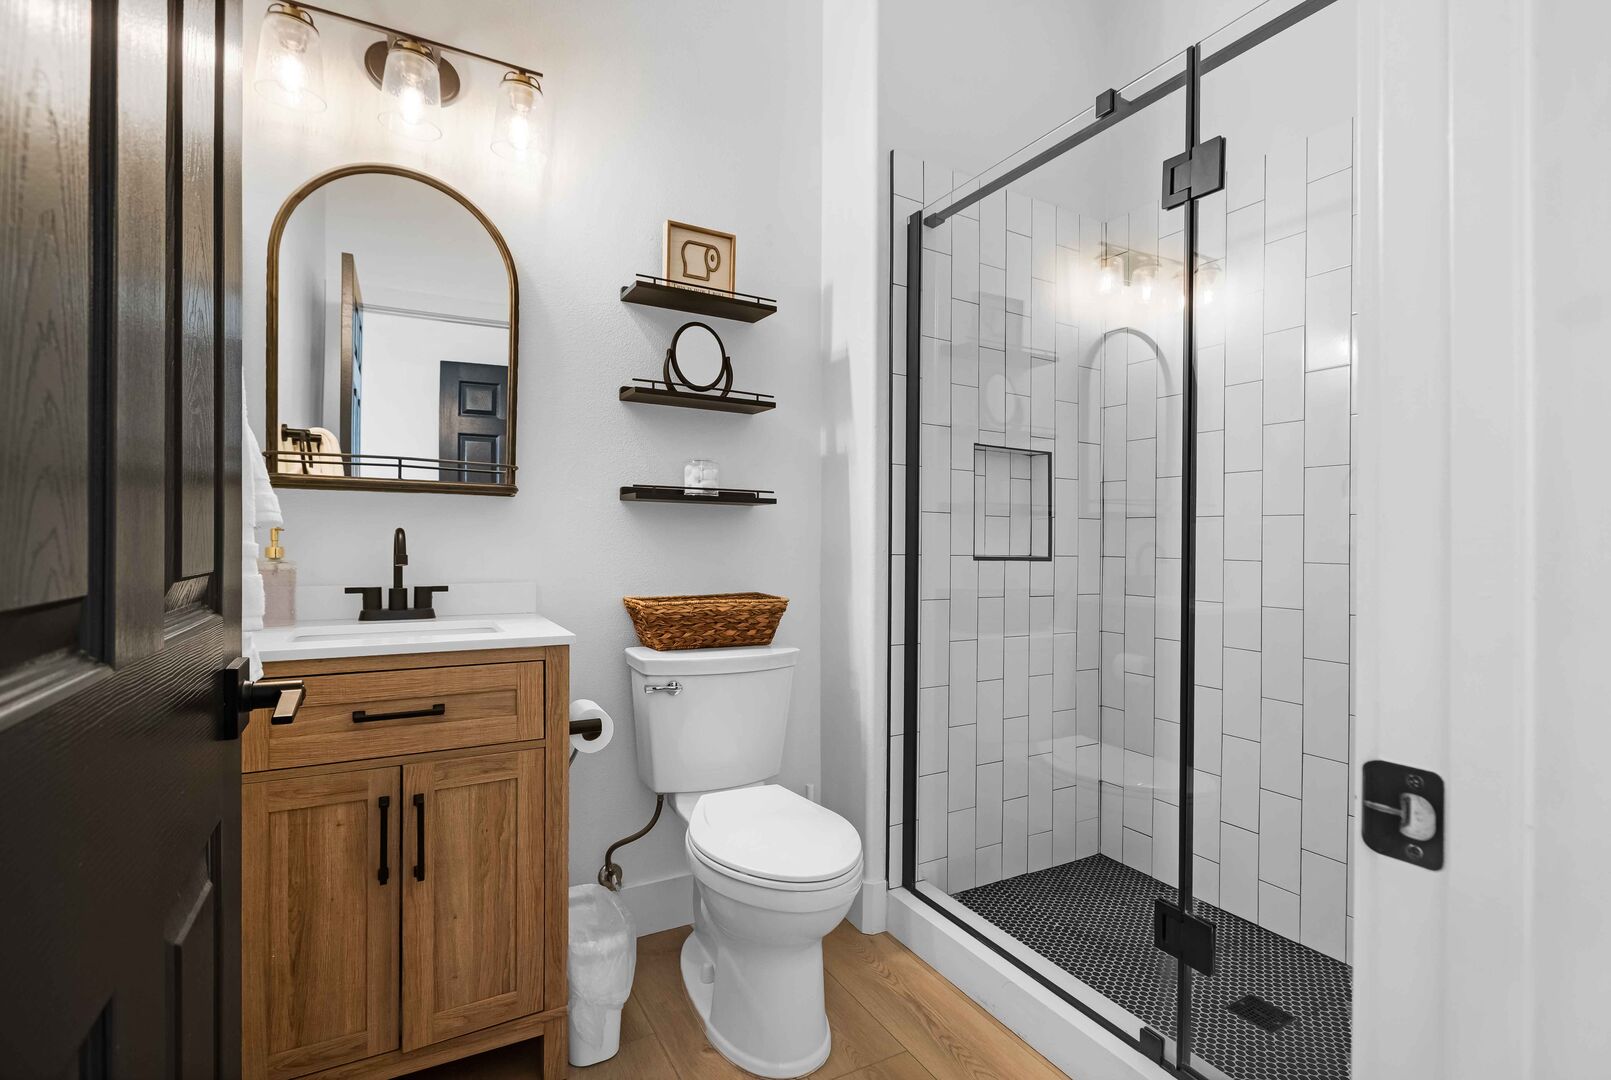 Suite 2 private, en suite bathroom features a tile shower and a vanity sink.